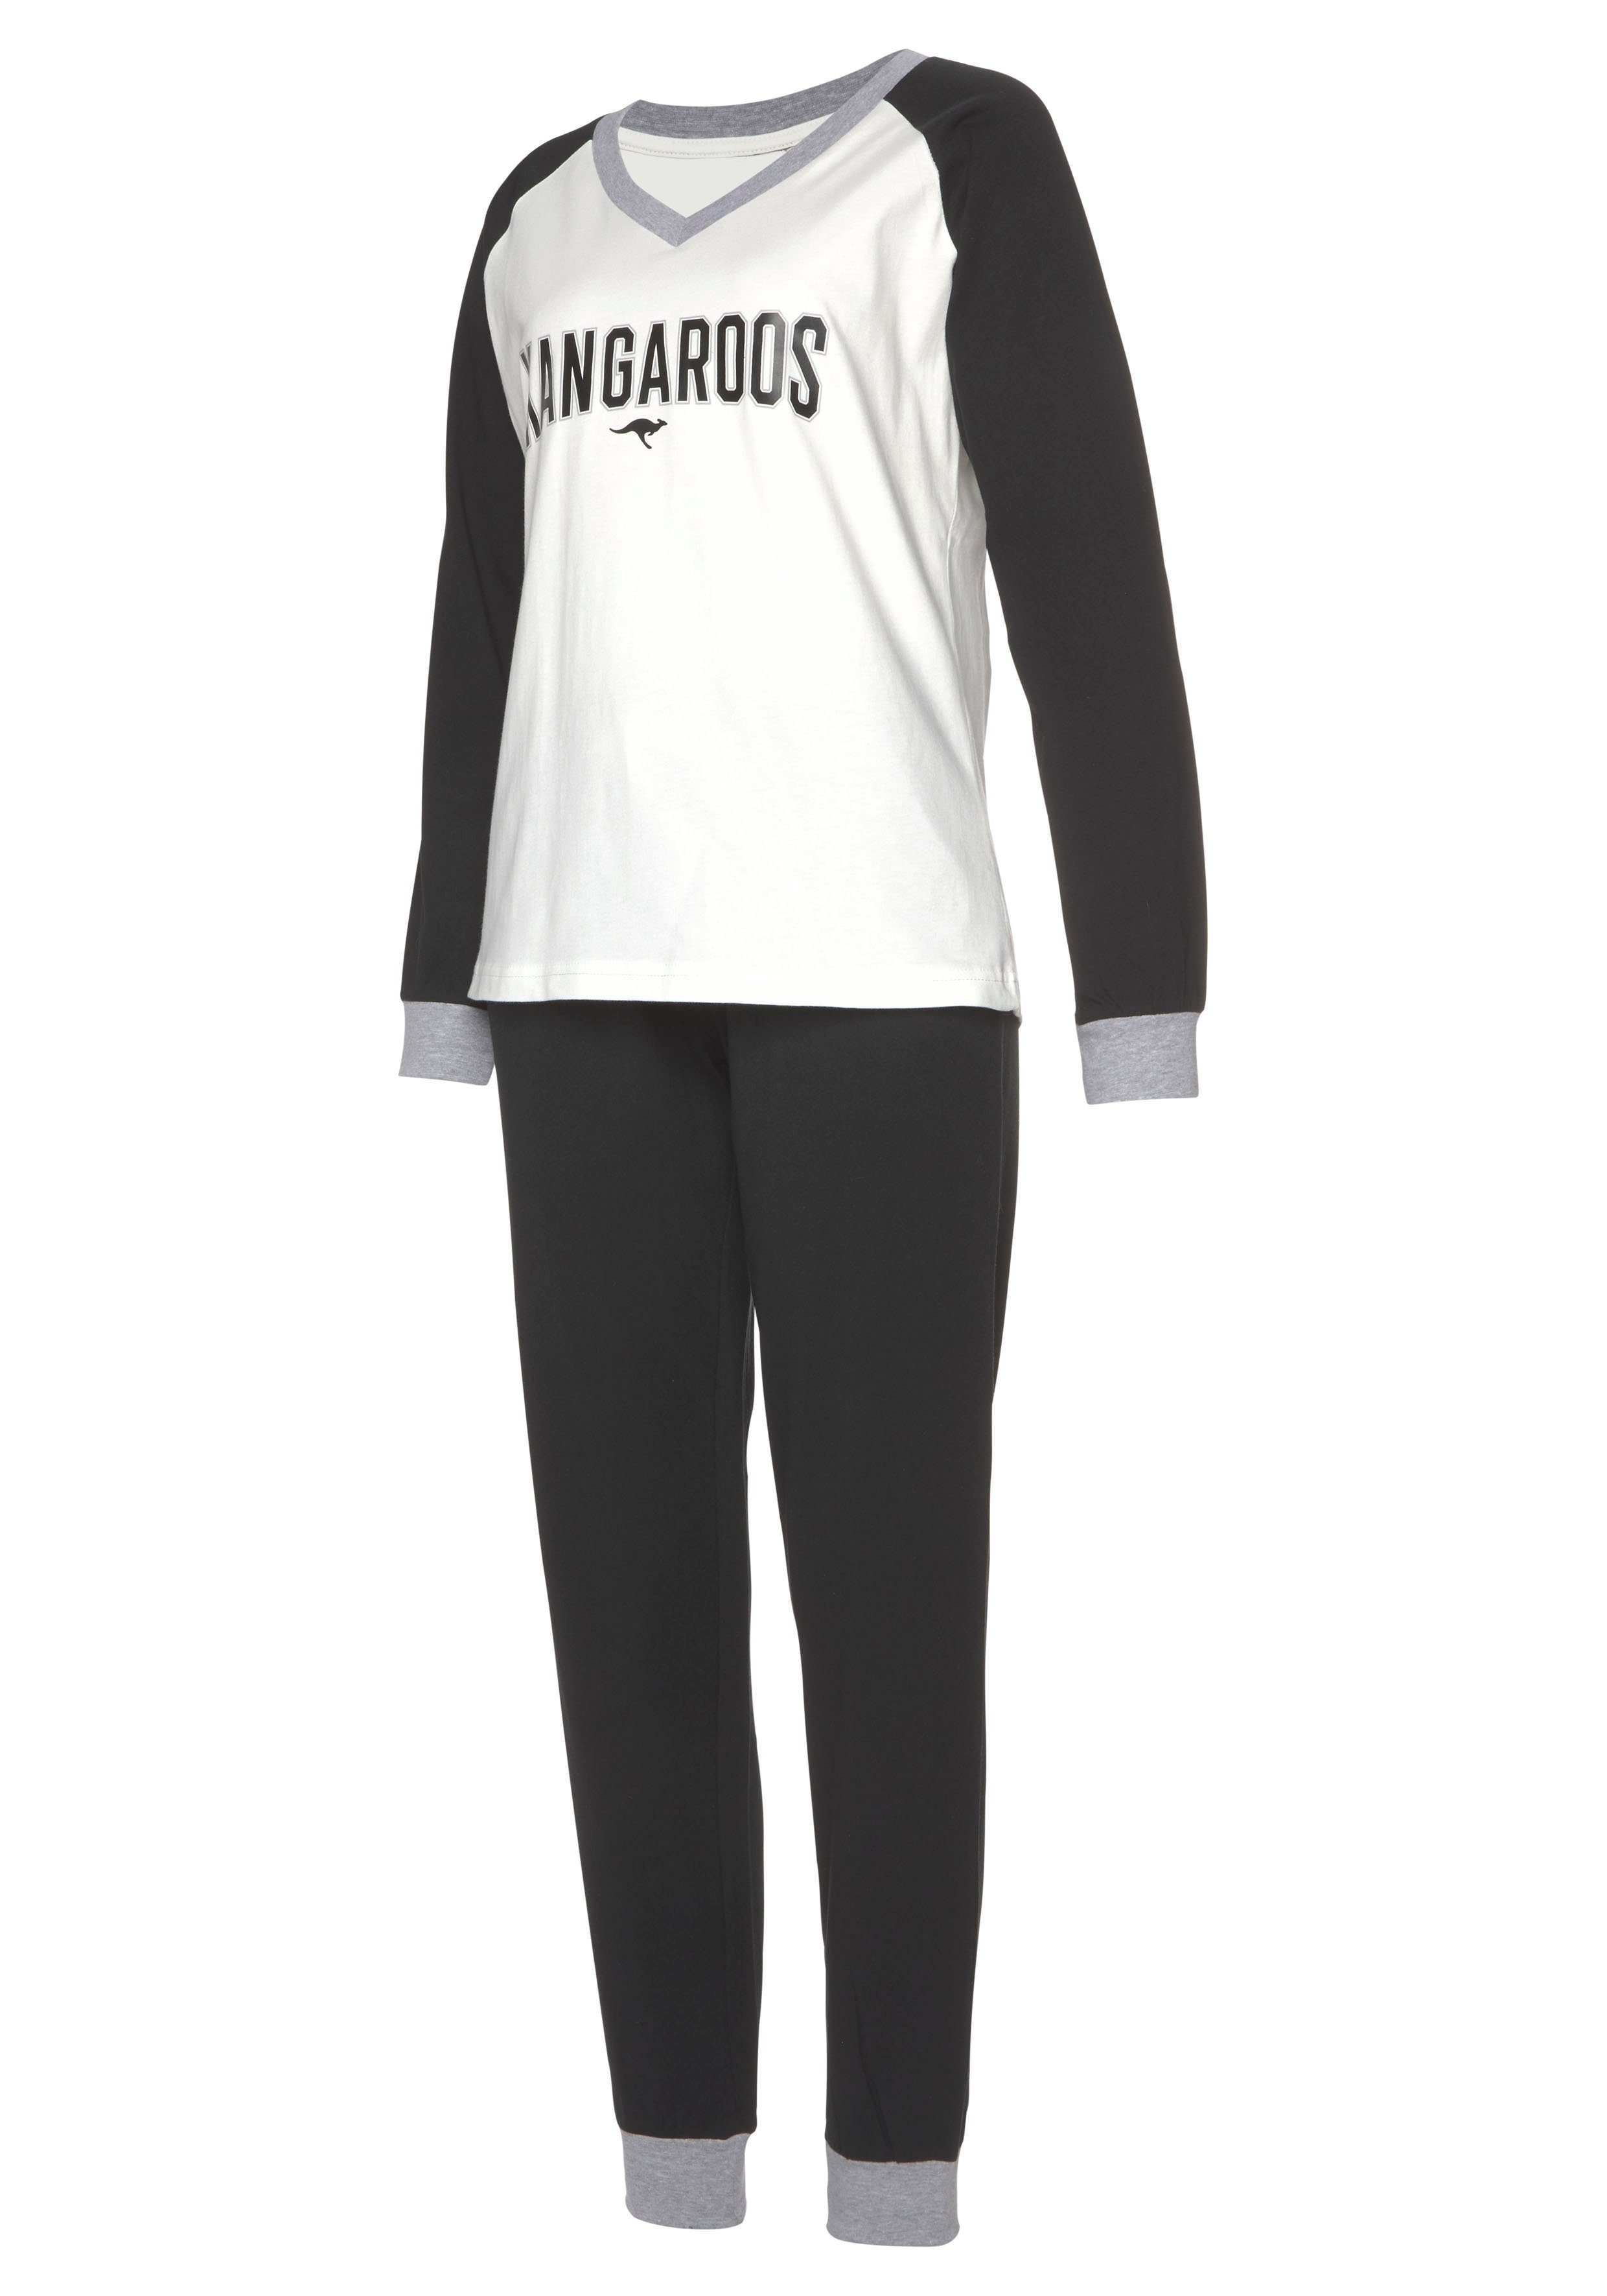 Stück) mit (2 tlg., schwarz-weiß KangaROOS Pyjama kontrastfarbenen 1 Raglanärmeln